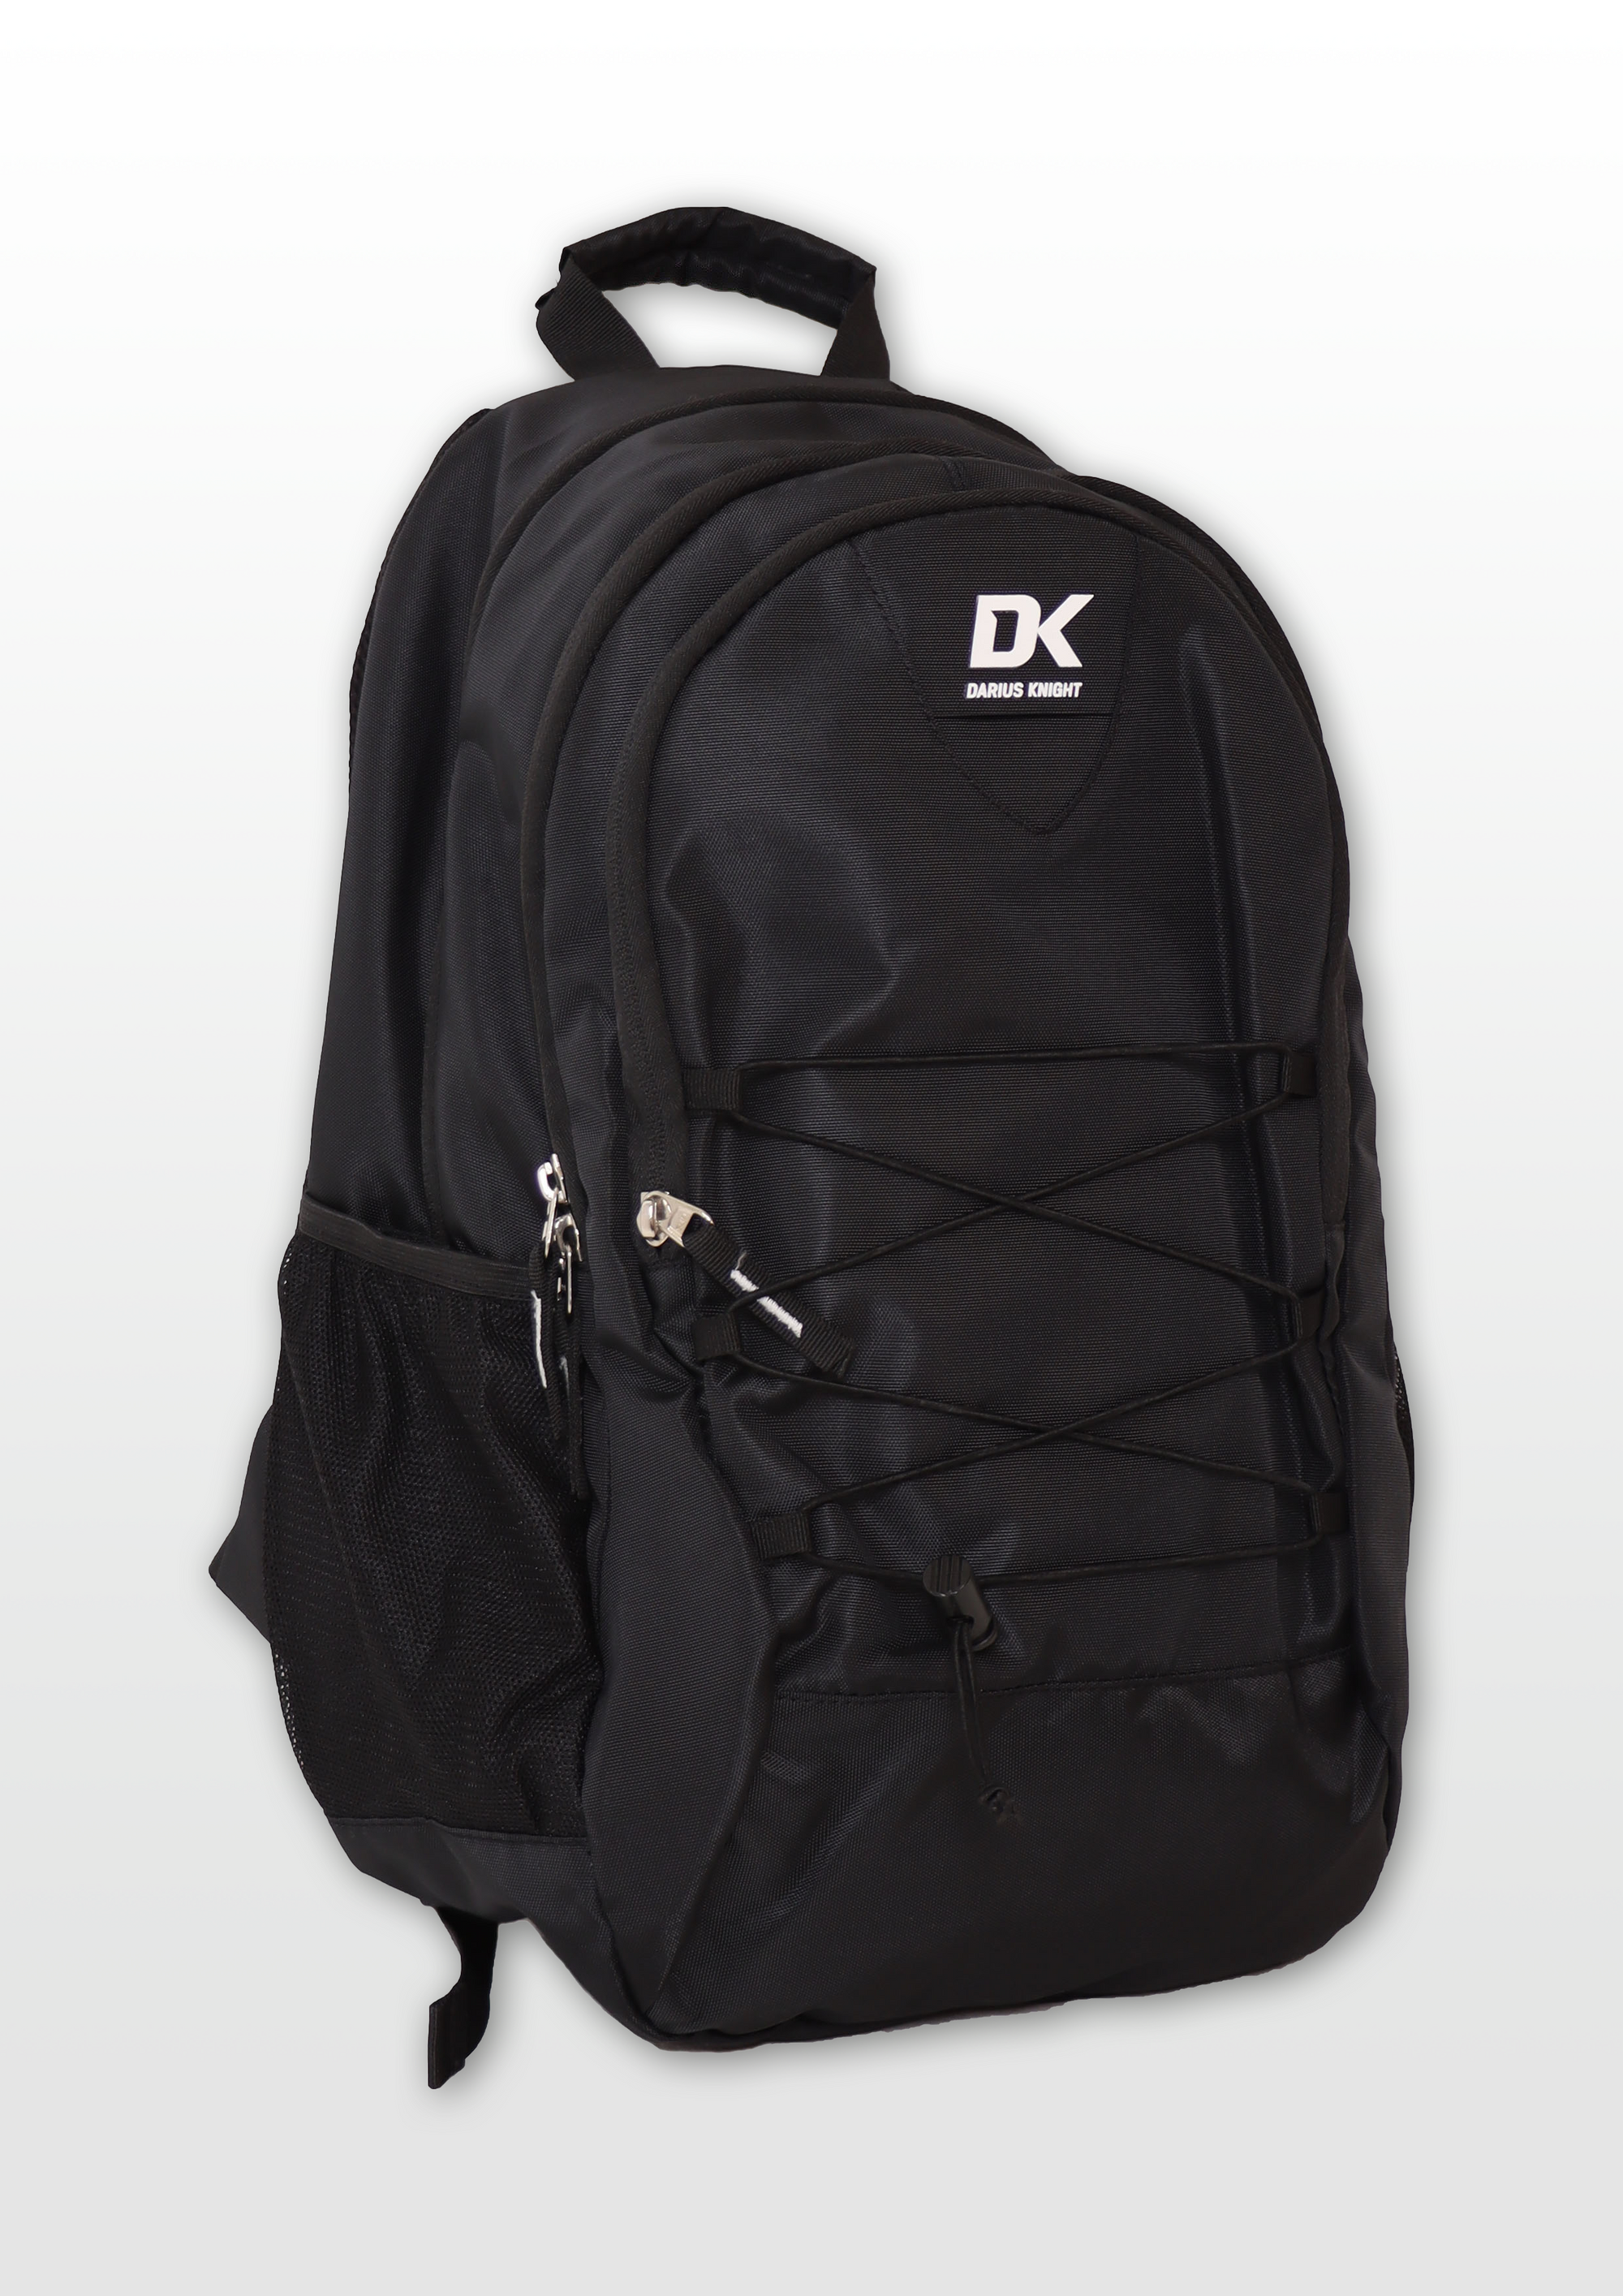 DK Pro Rucksack - DK Sports